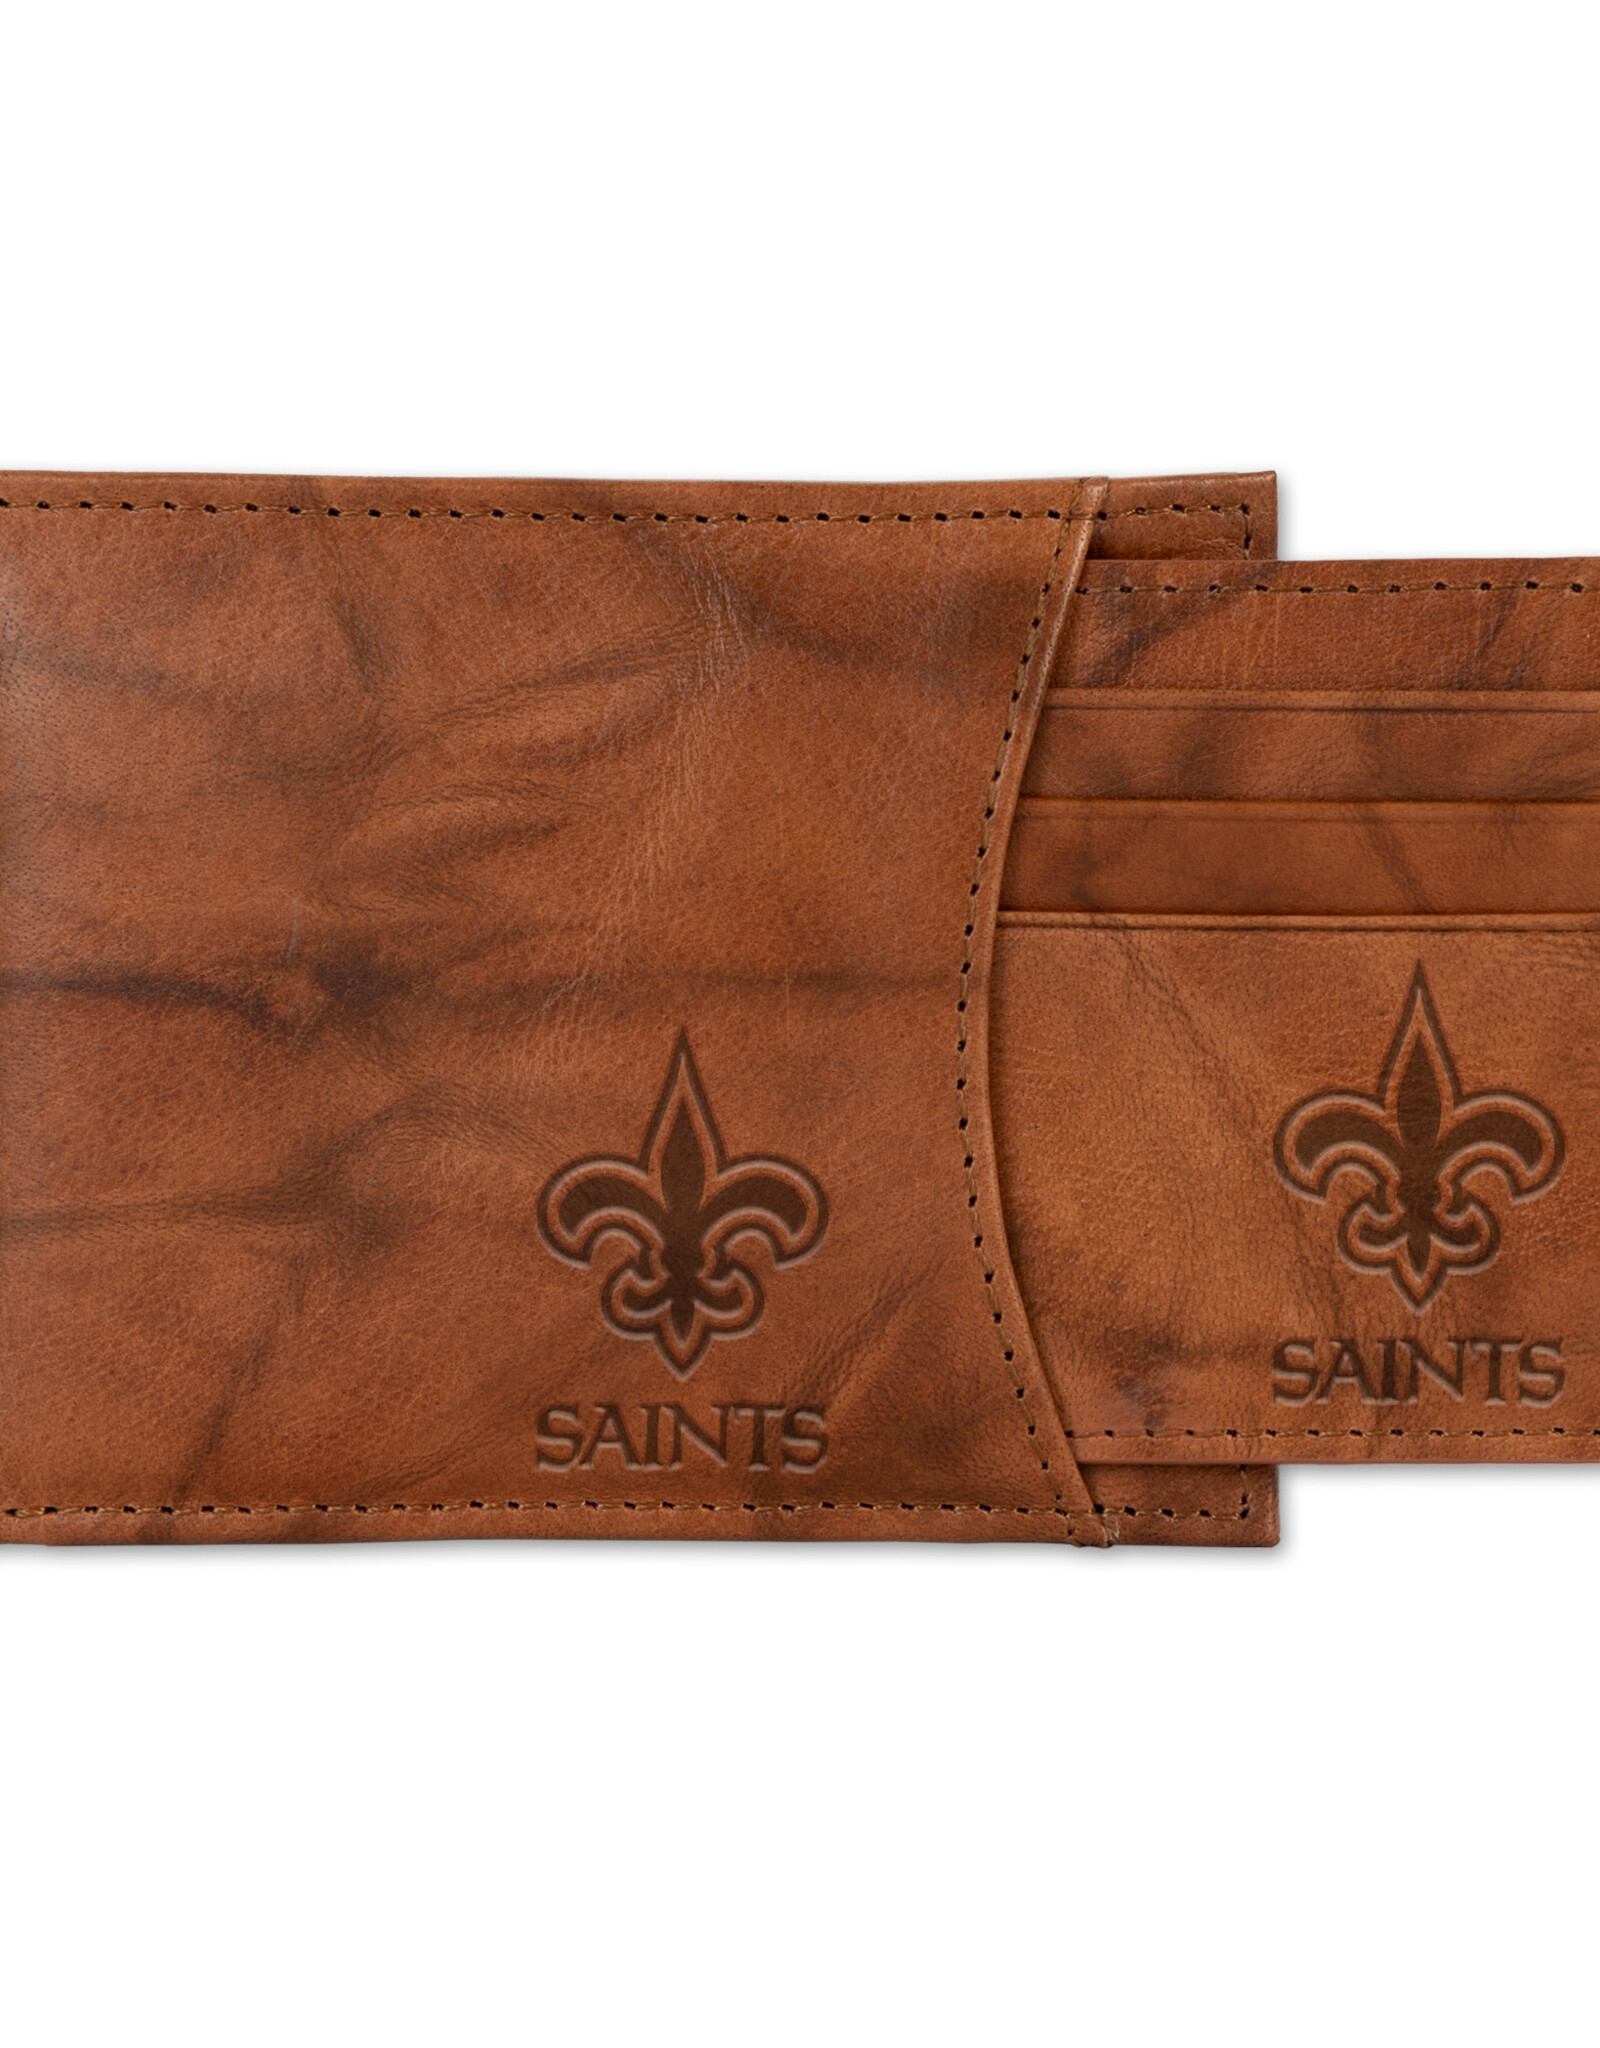 RICO INDUSTRIES New Orleans Saints 2-in-1 Vintage Slider Billfold Wallet Set